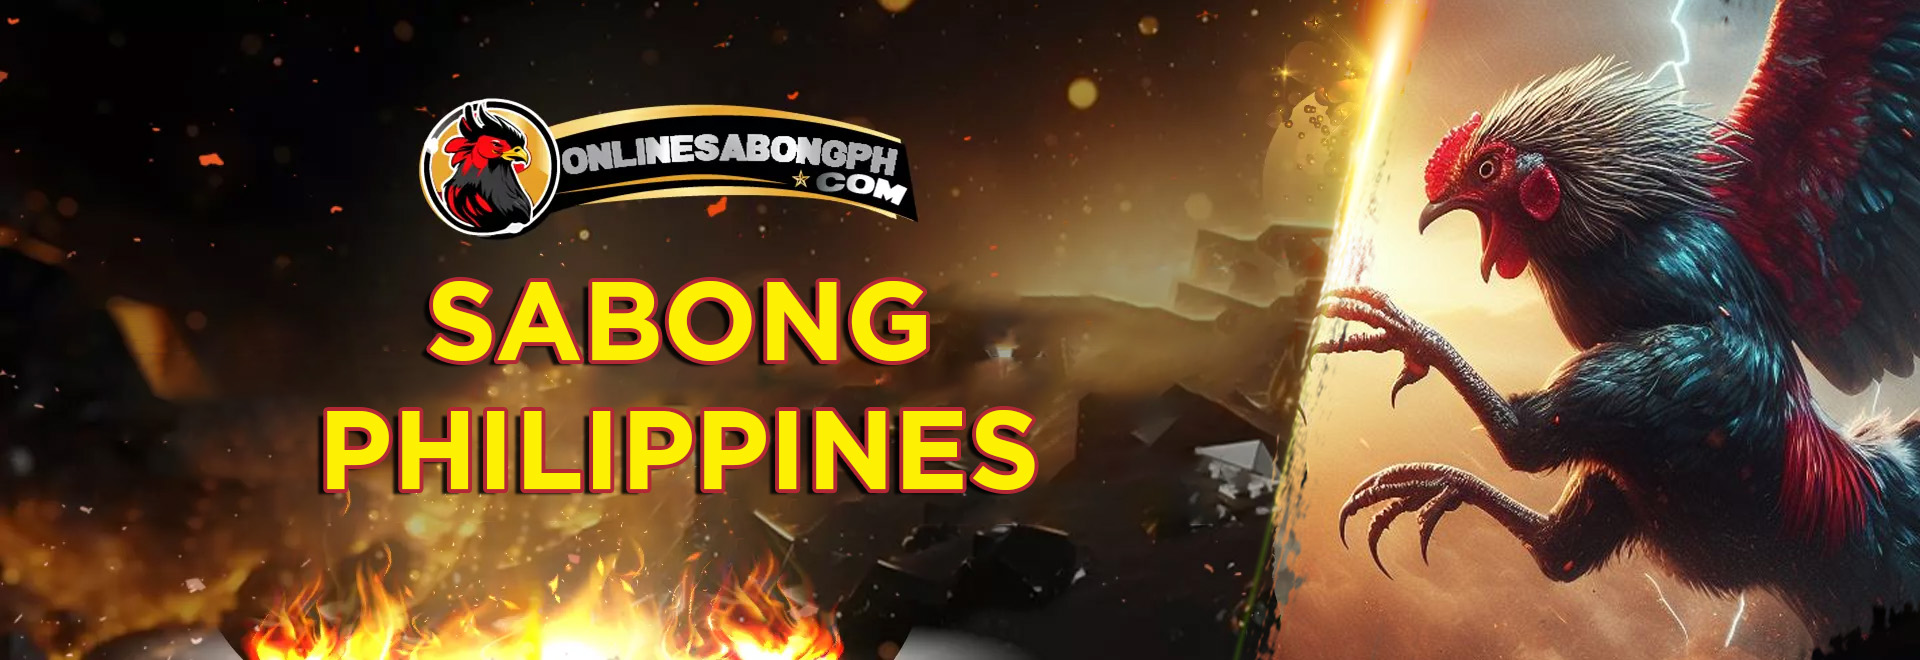 Online Sabong Philippines